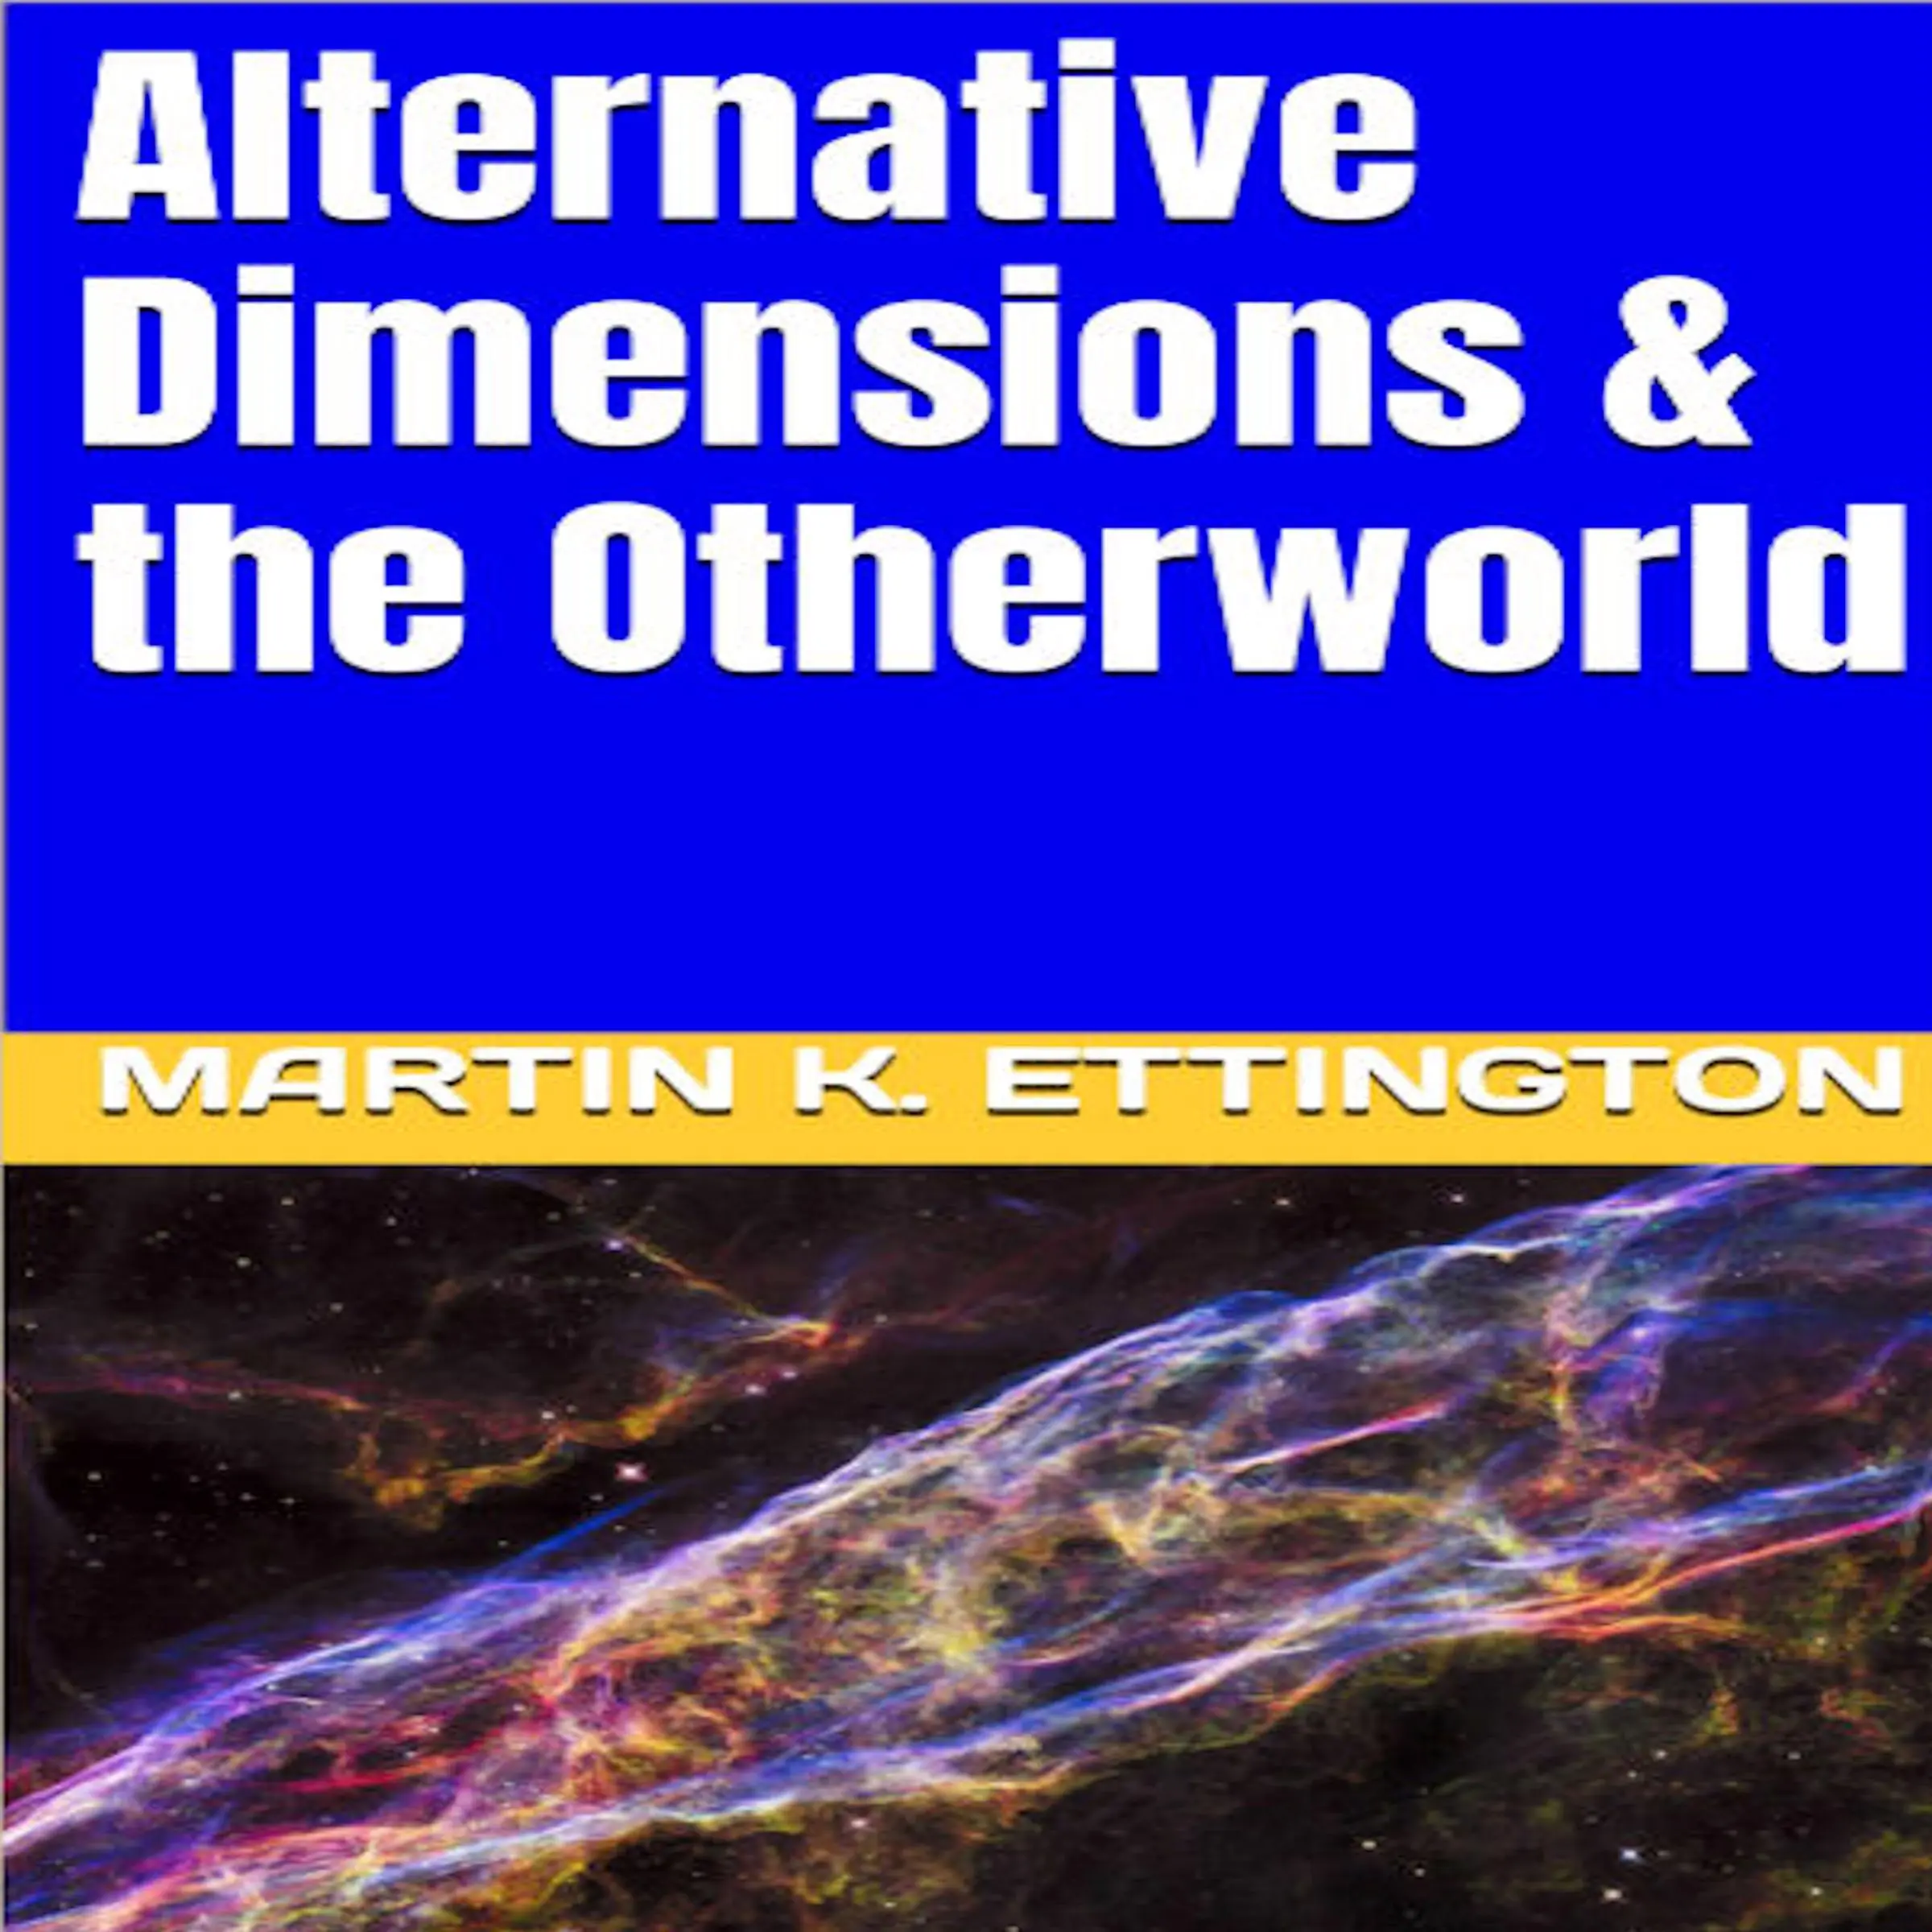 Alternative Dimensions & the Otherworld by Martin K. Ettington Audiobook